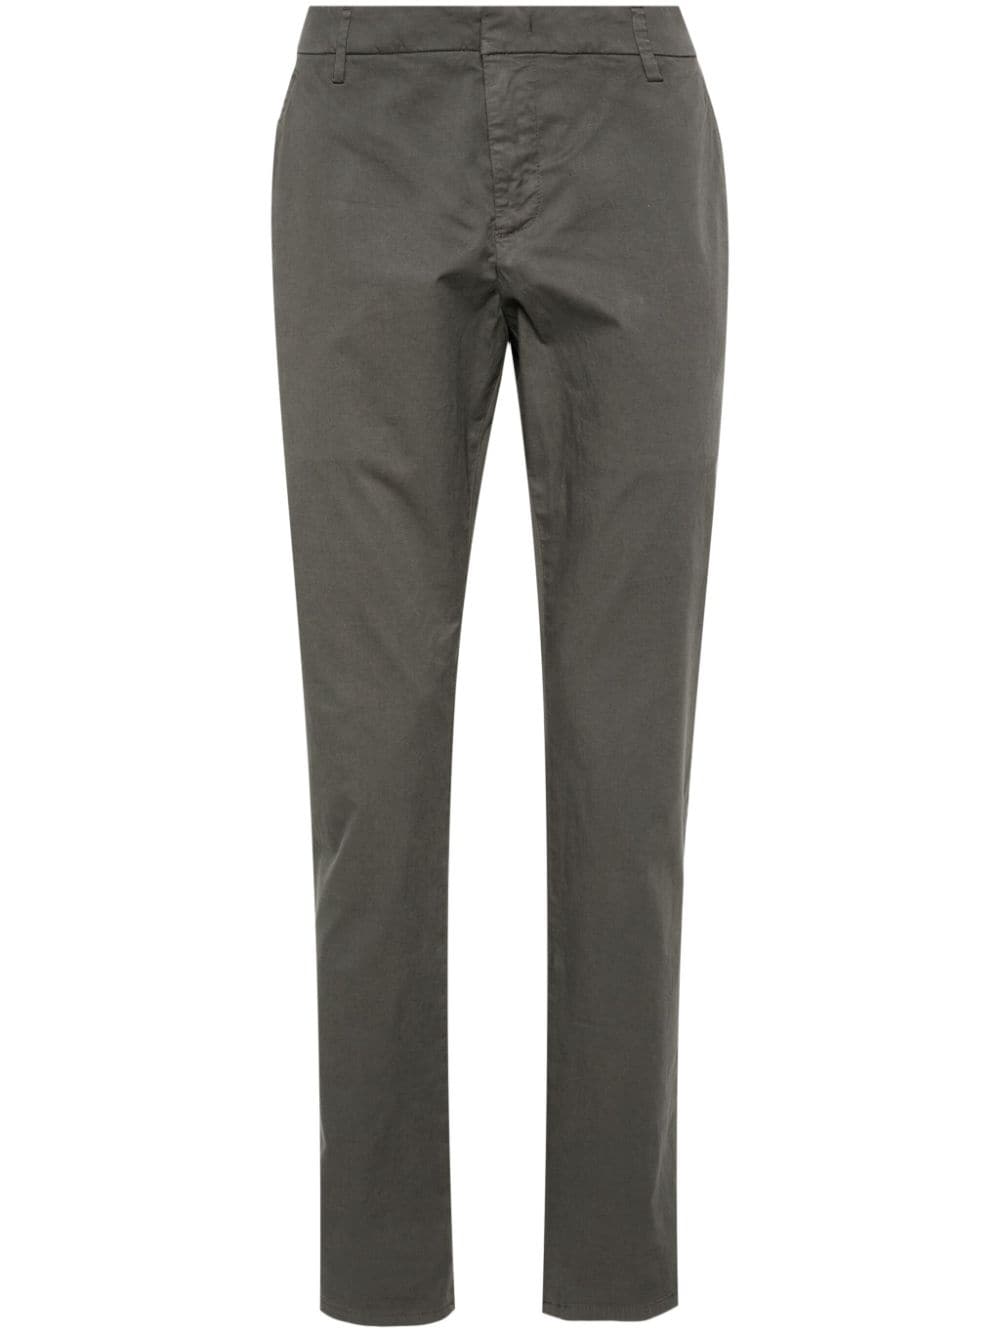 Pantalone Gaubert grigio